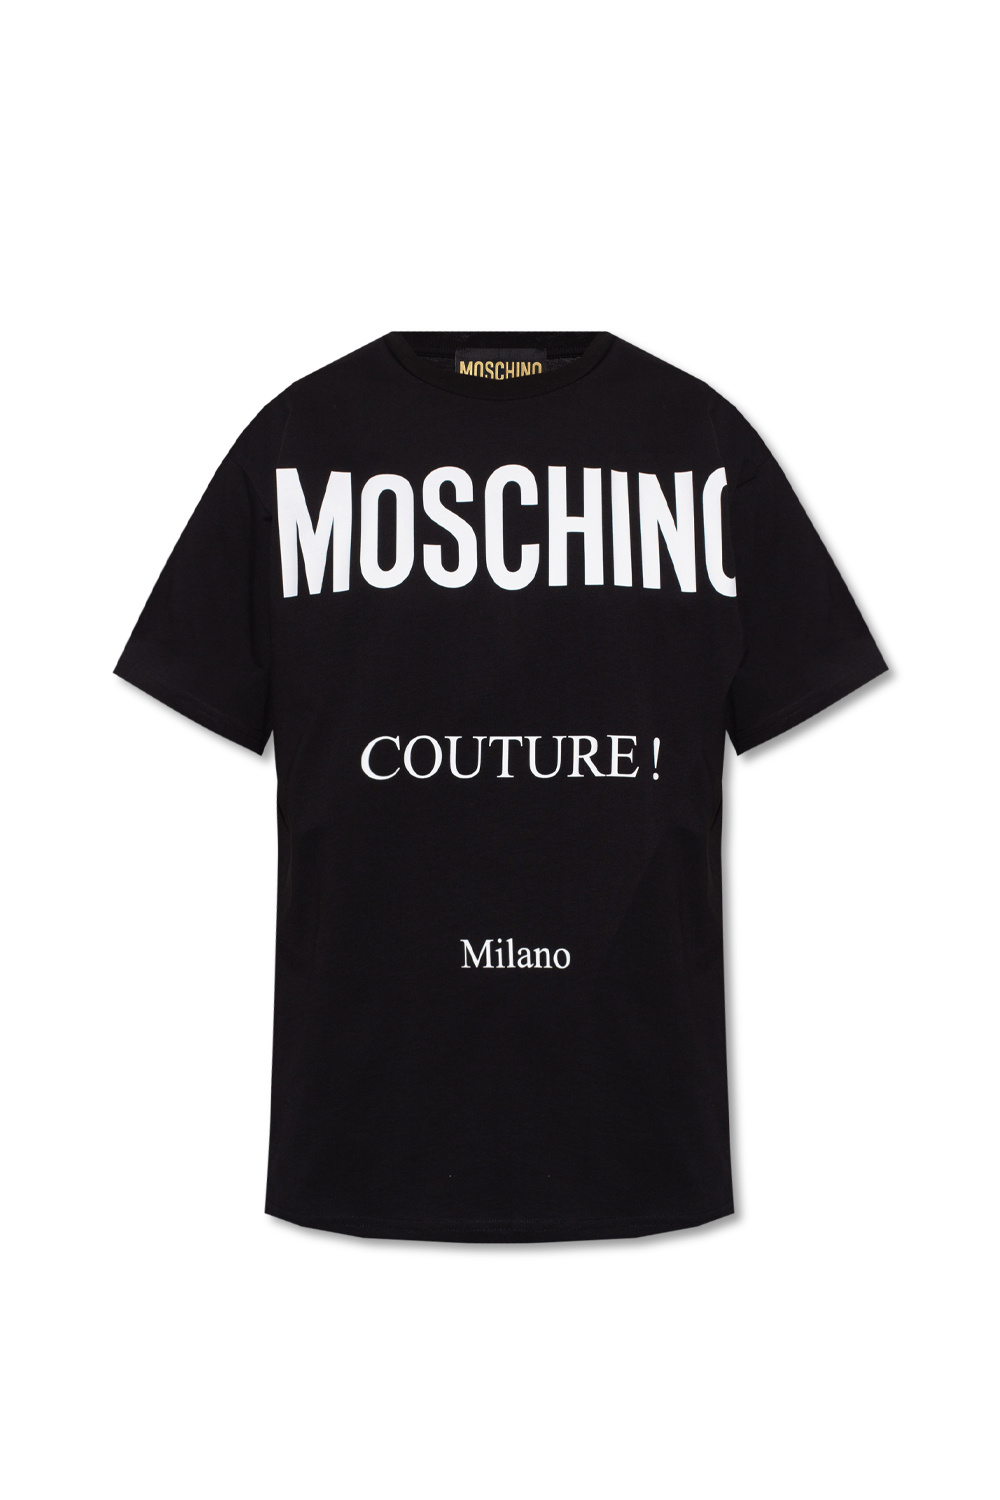 Louis Vuitton Graffiti Graphic T-Shirt - Black T-Shirts, Clothing